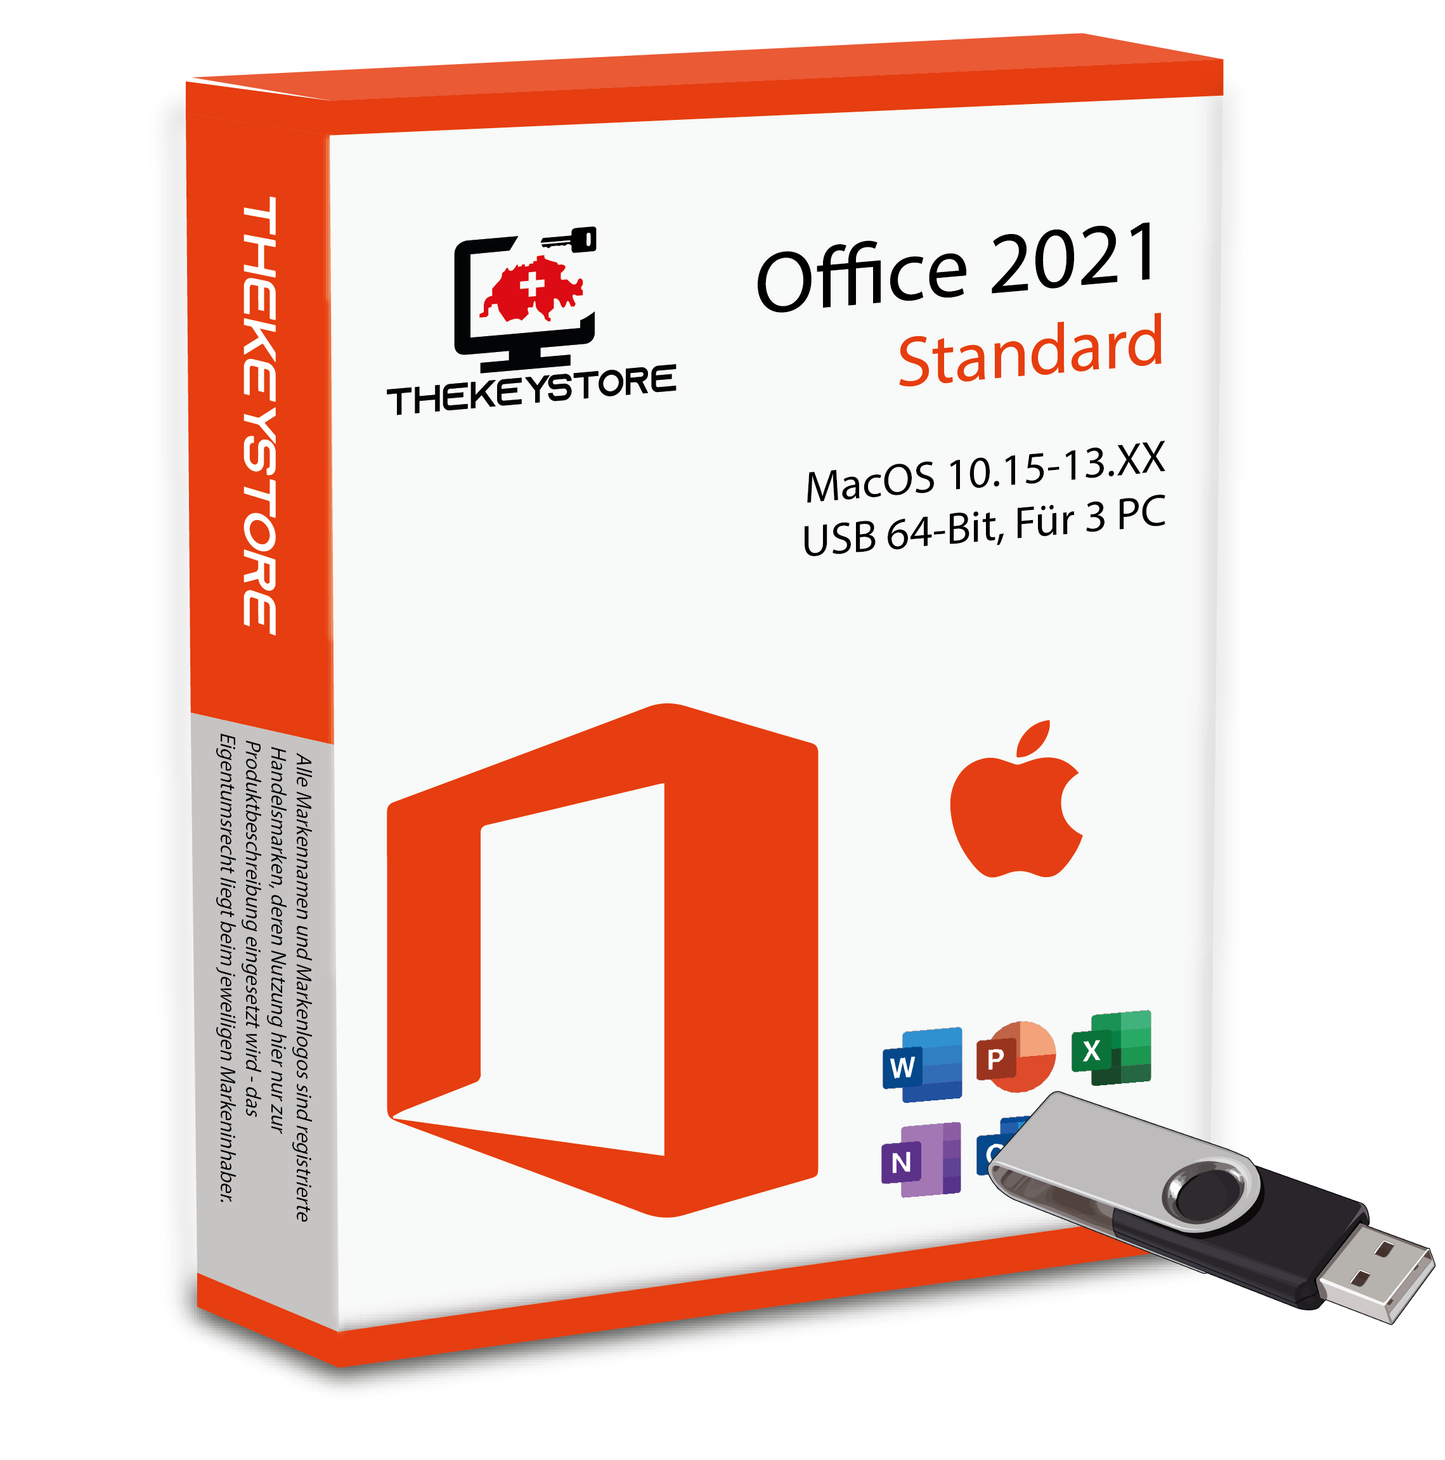 Microsoft Office 2021 Standard MacOS 10.15-13.XX - Für 3 PC - TheKeyStore Schweiz